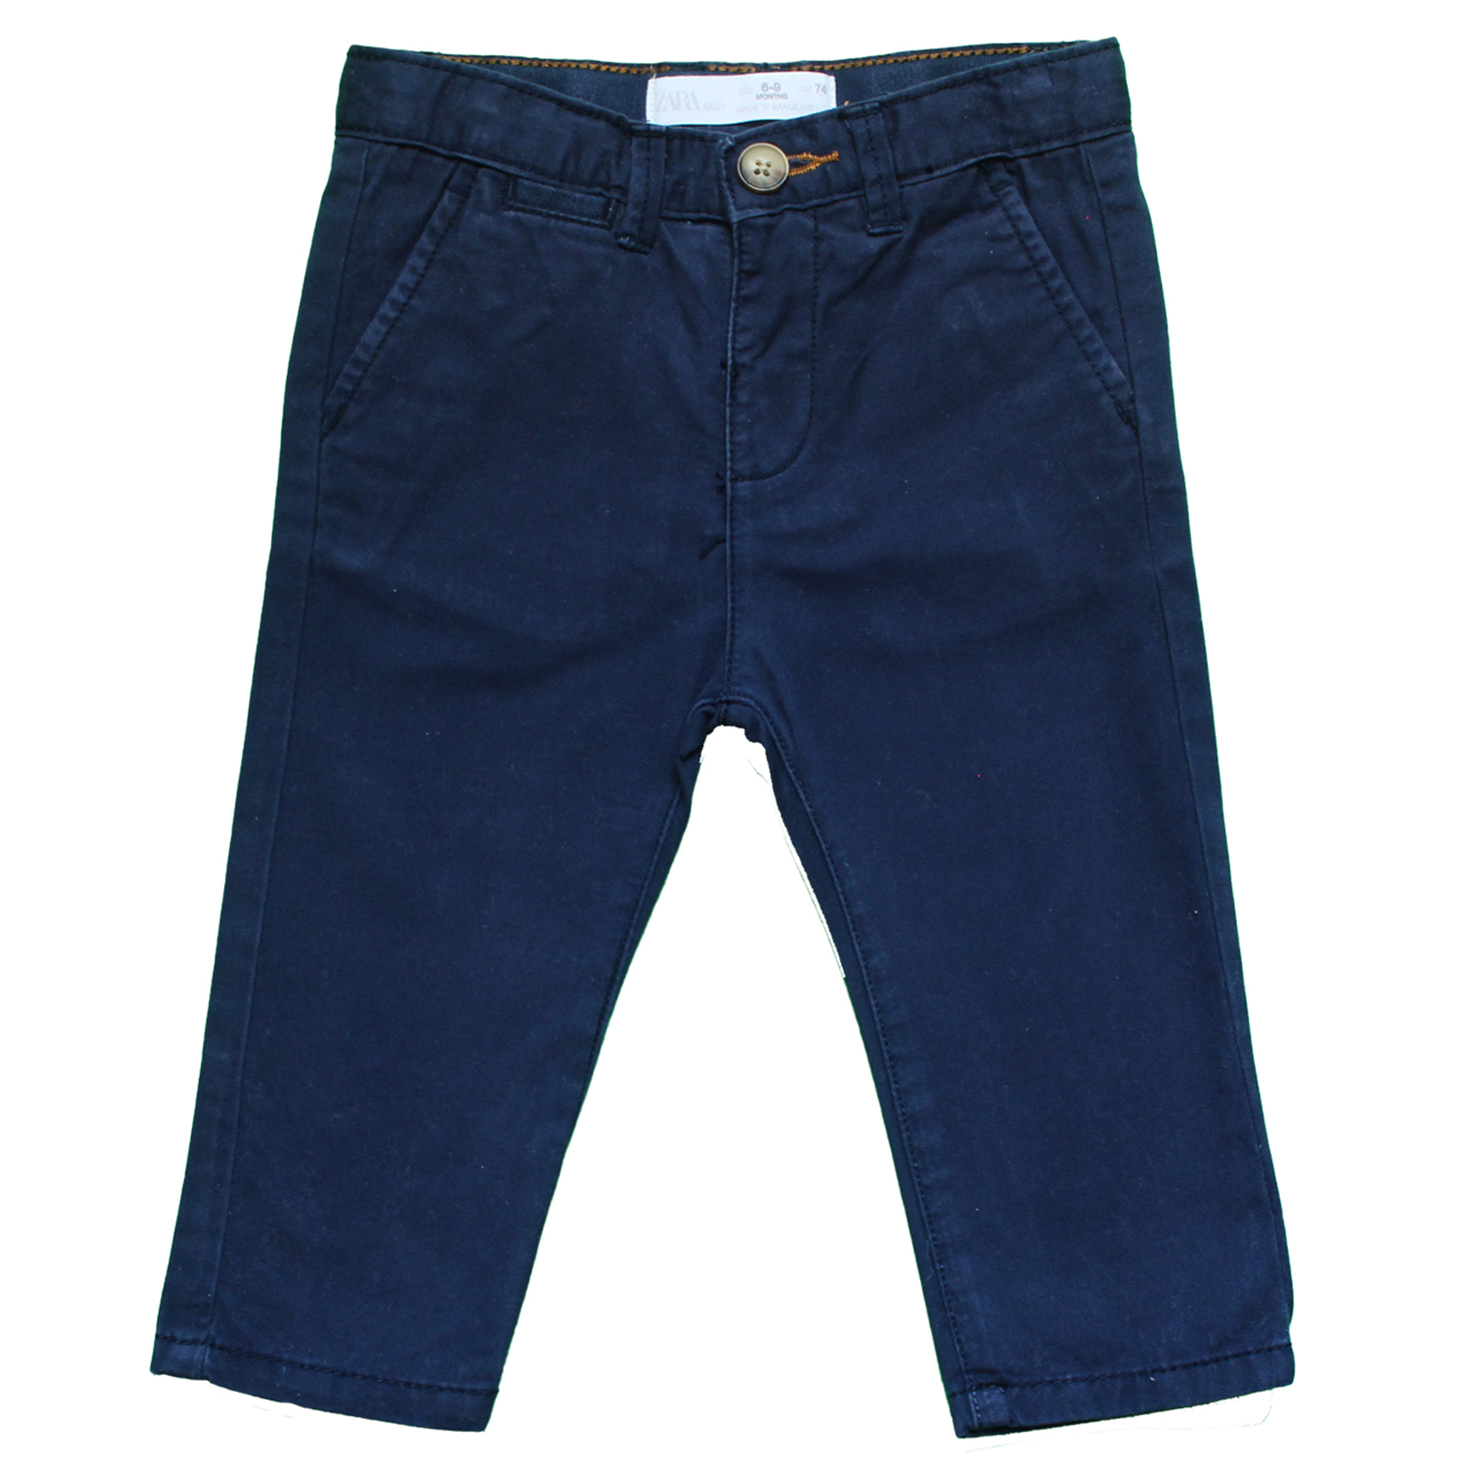 Pantalon garon bleu ZARA - 9 mois